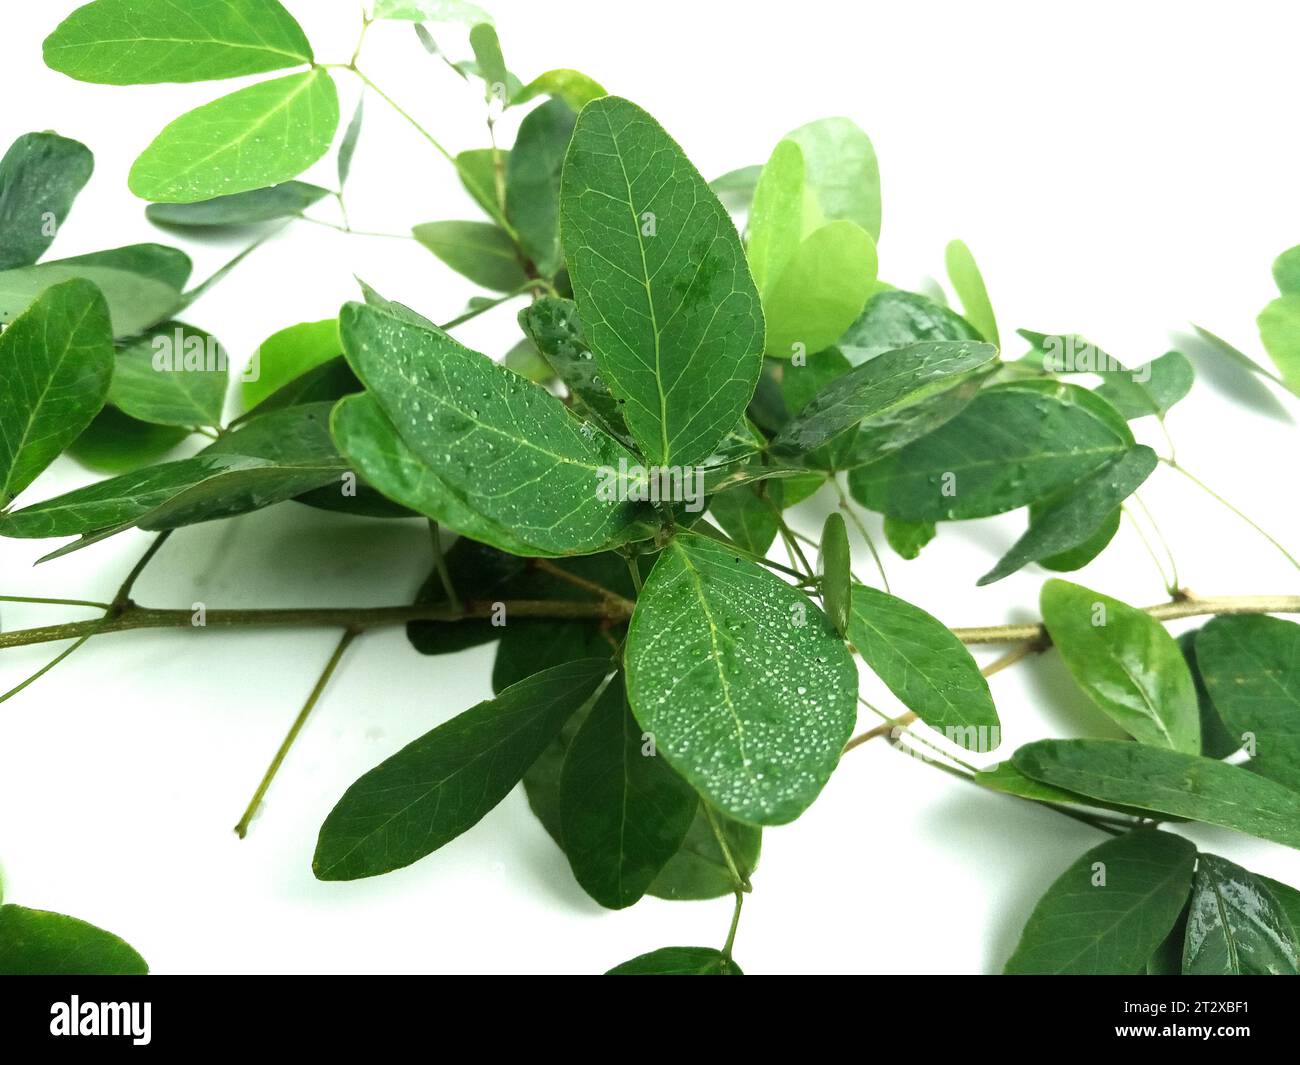 Close-up photo of blackbeads leaves isolated on white Background Stock Photo